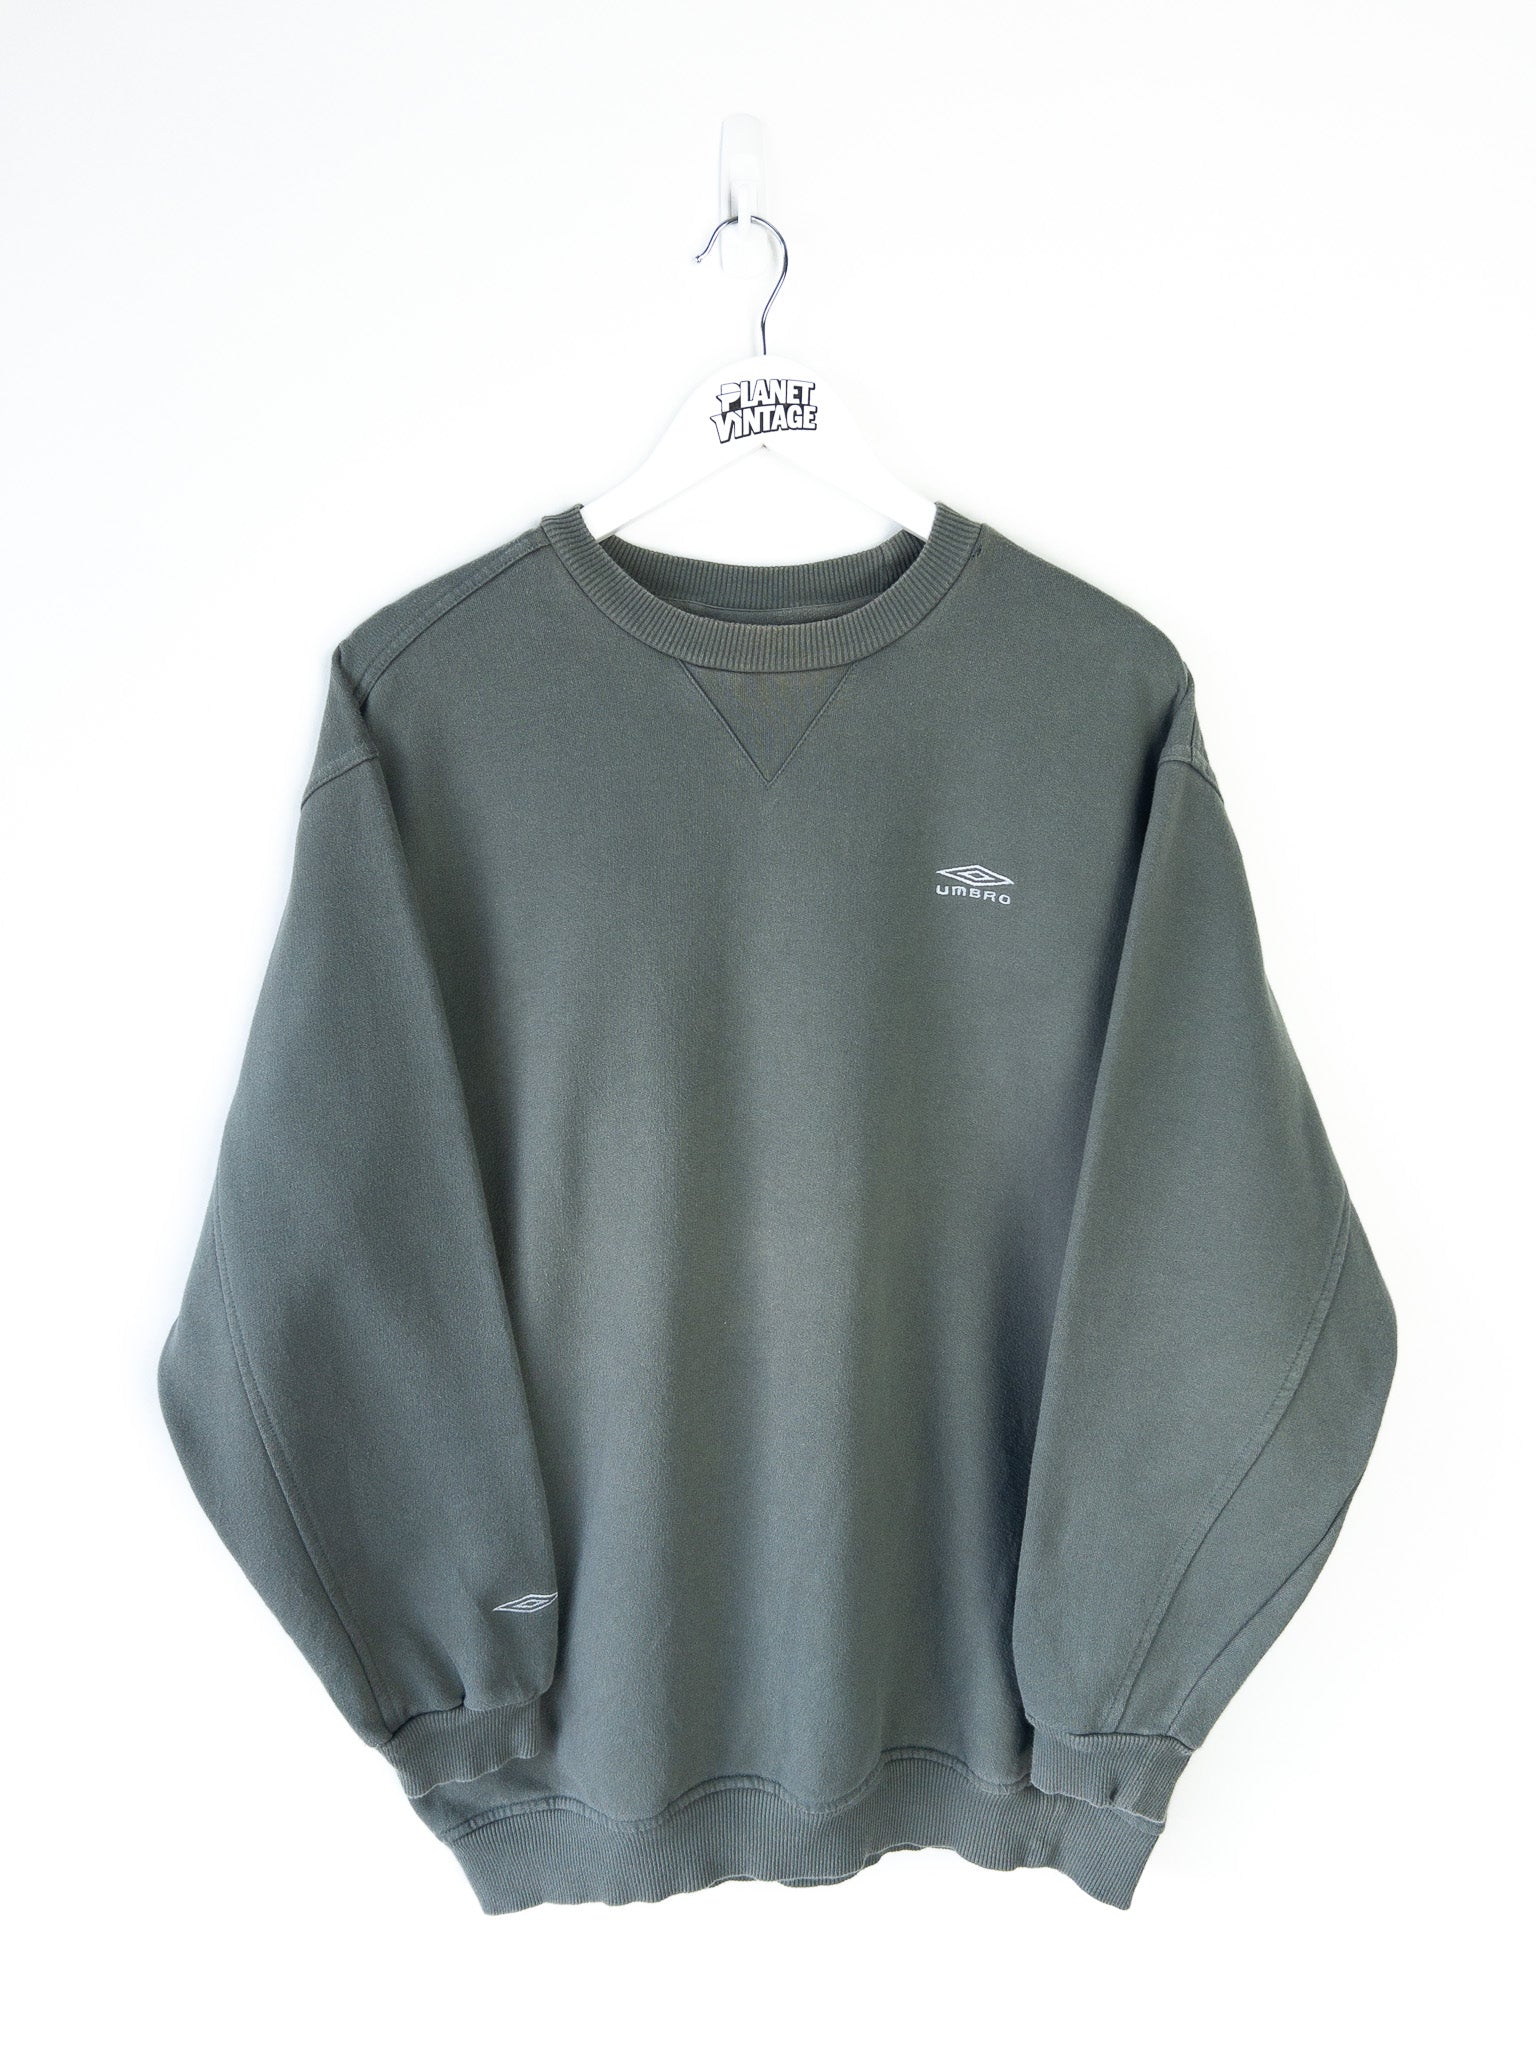 Vintage Umbro Sweatshirt (XL)